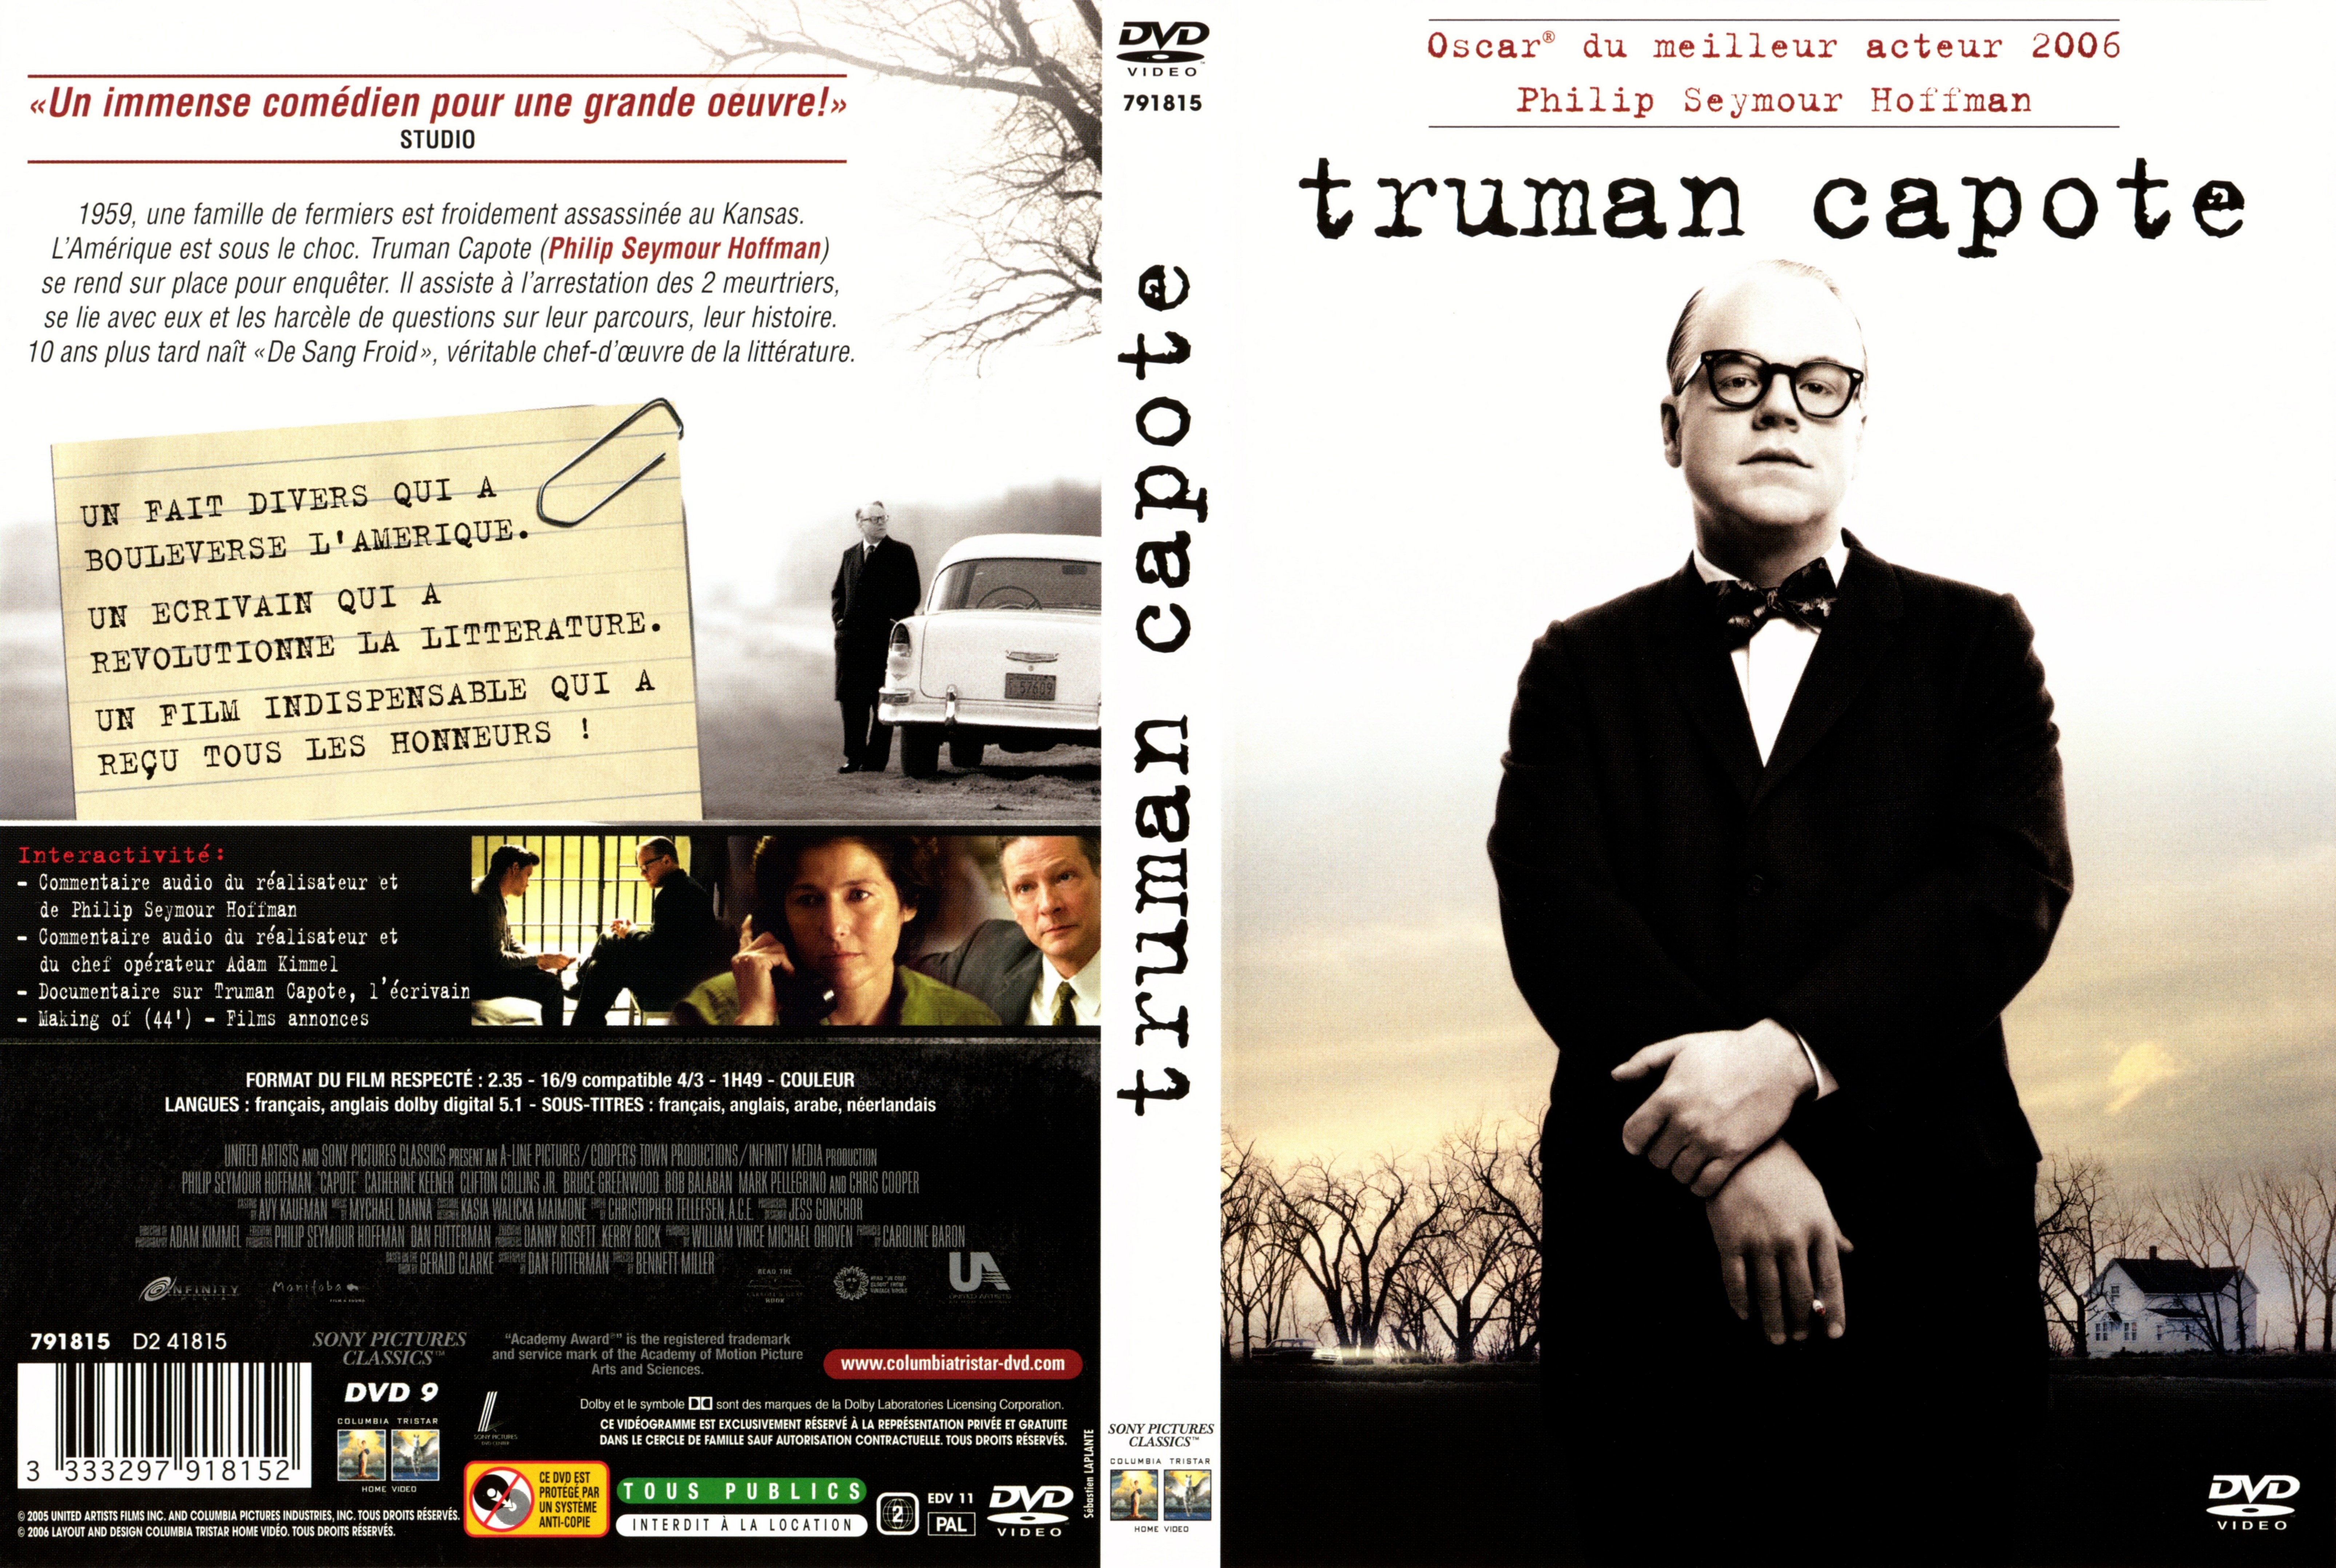 Jaquette DVD Truman Capote